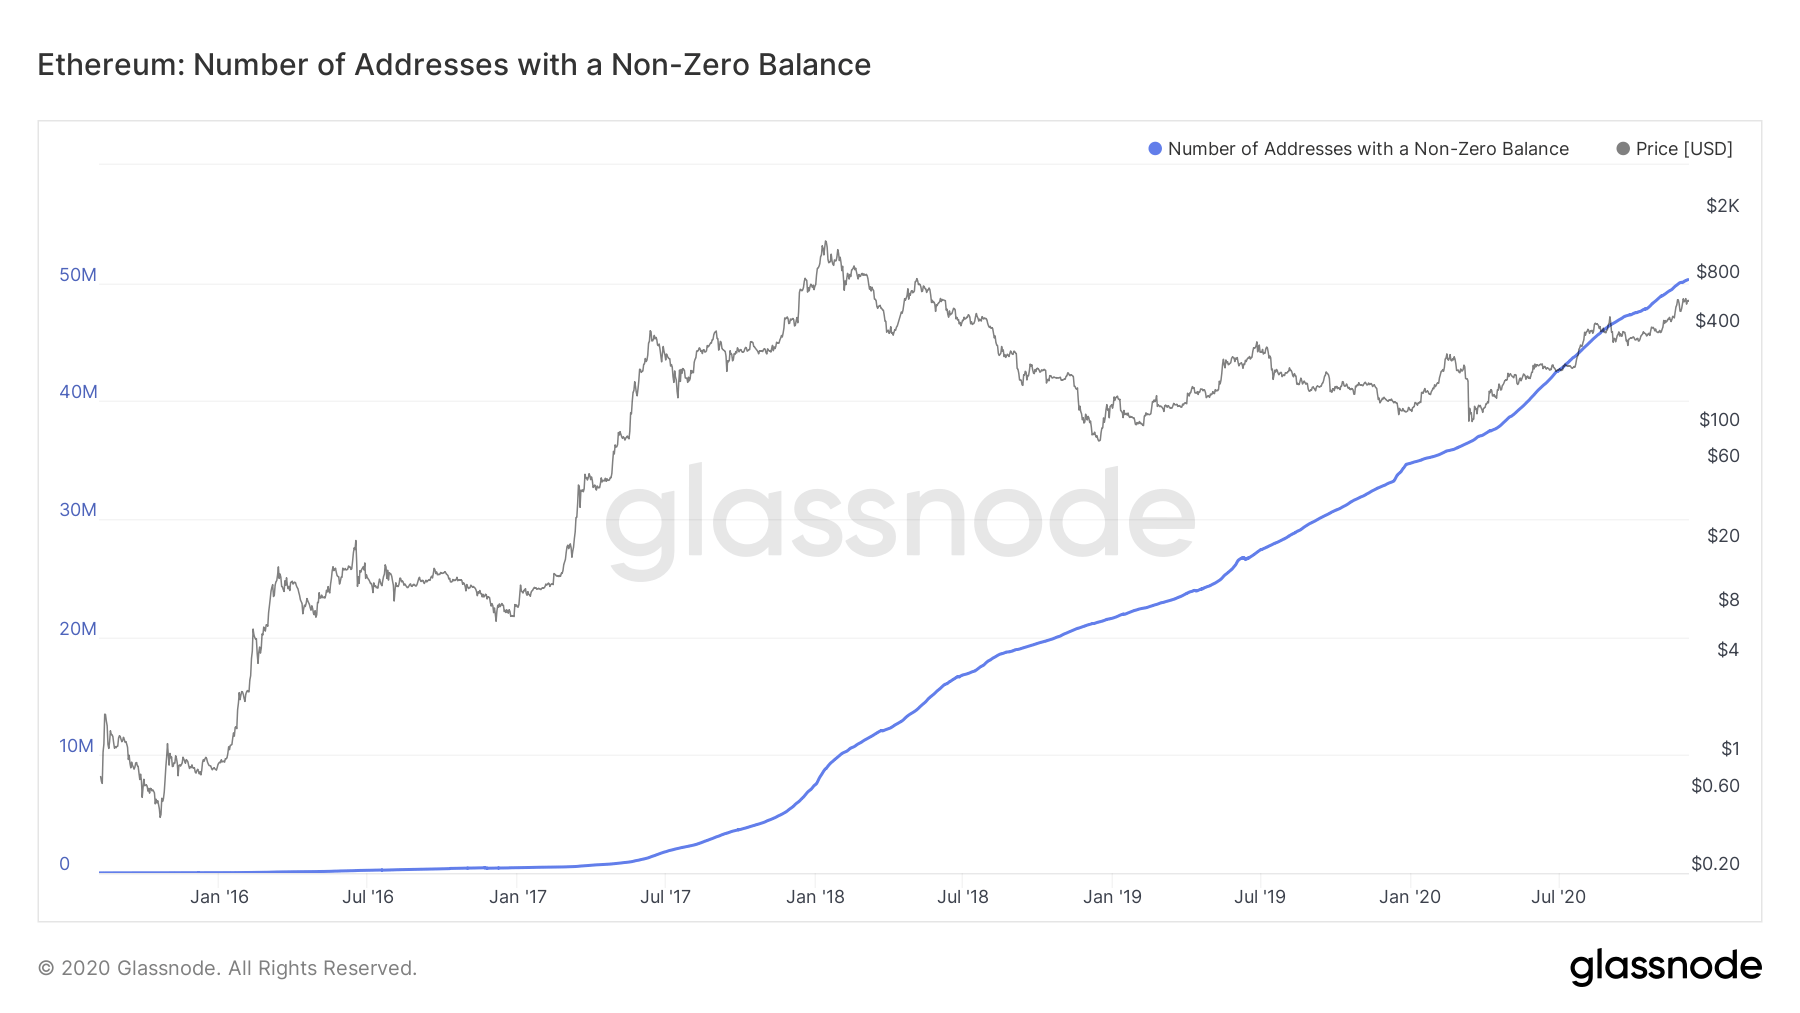 Non-Zero Balance Addresses from Glassnode